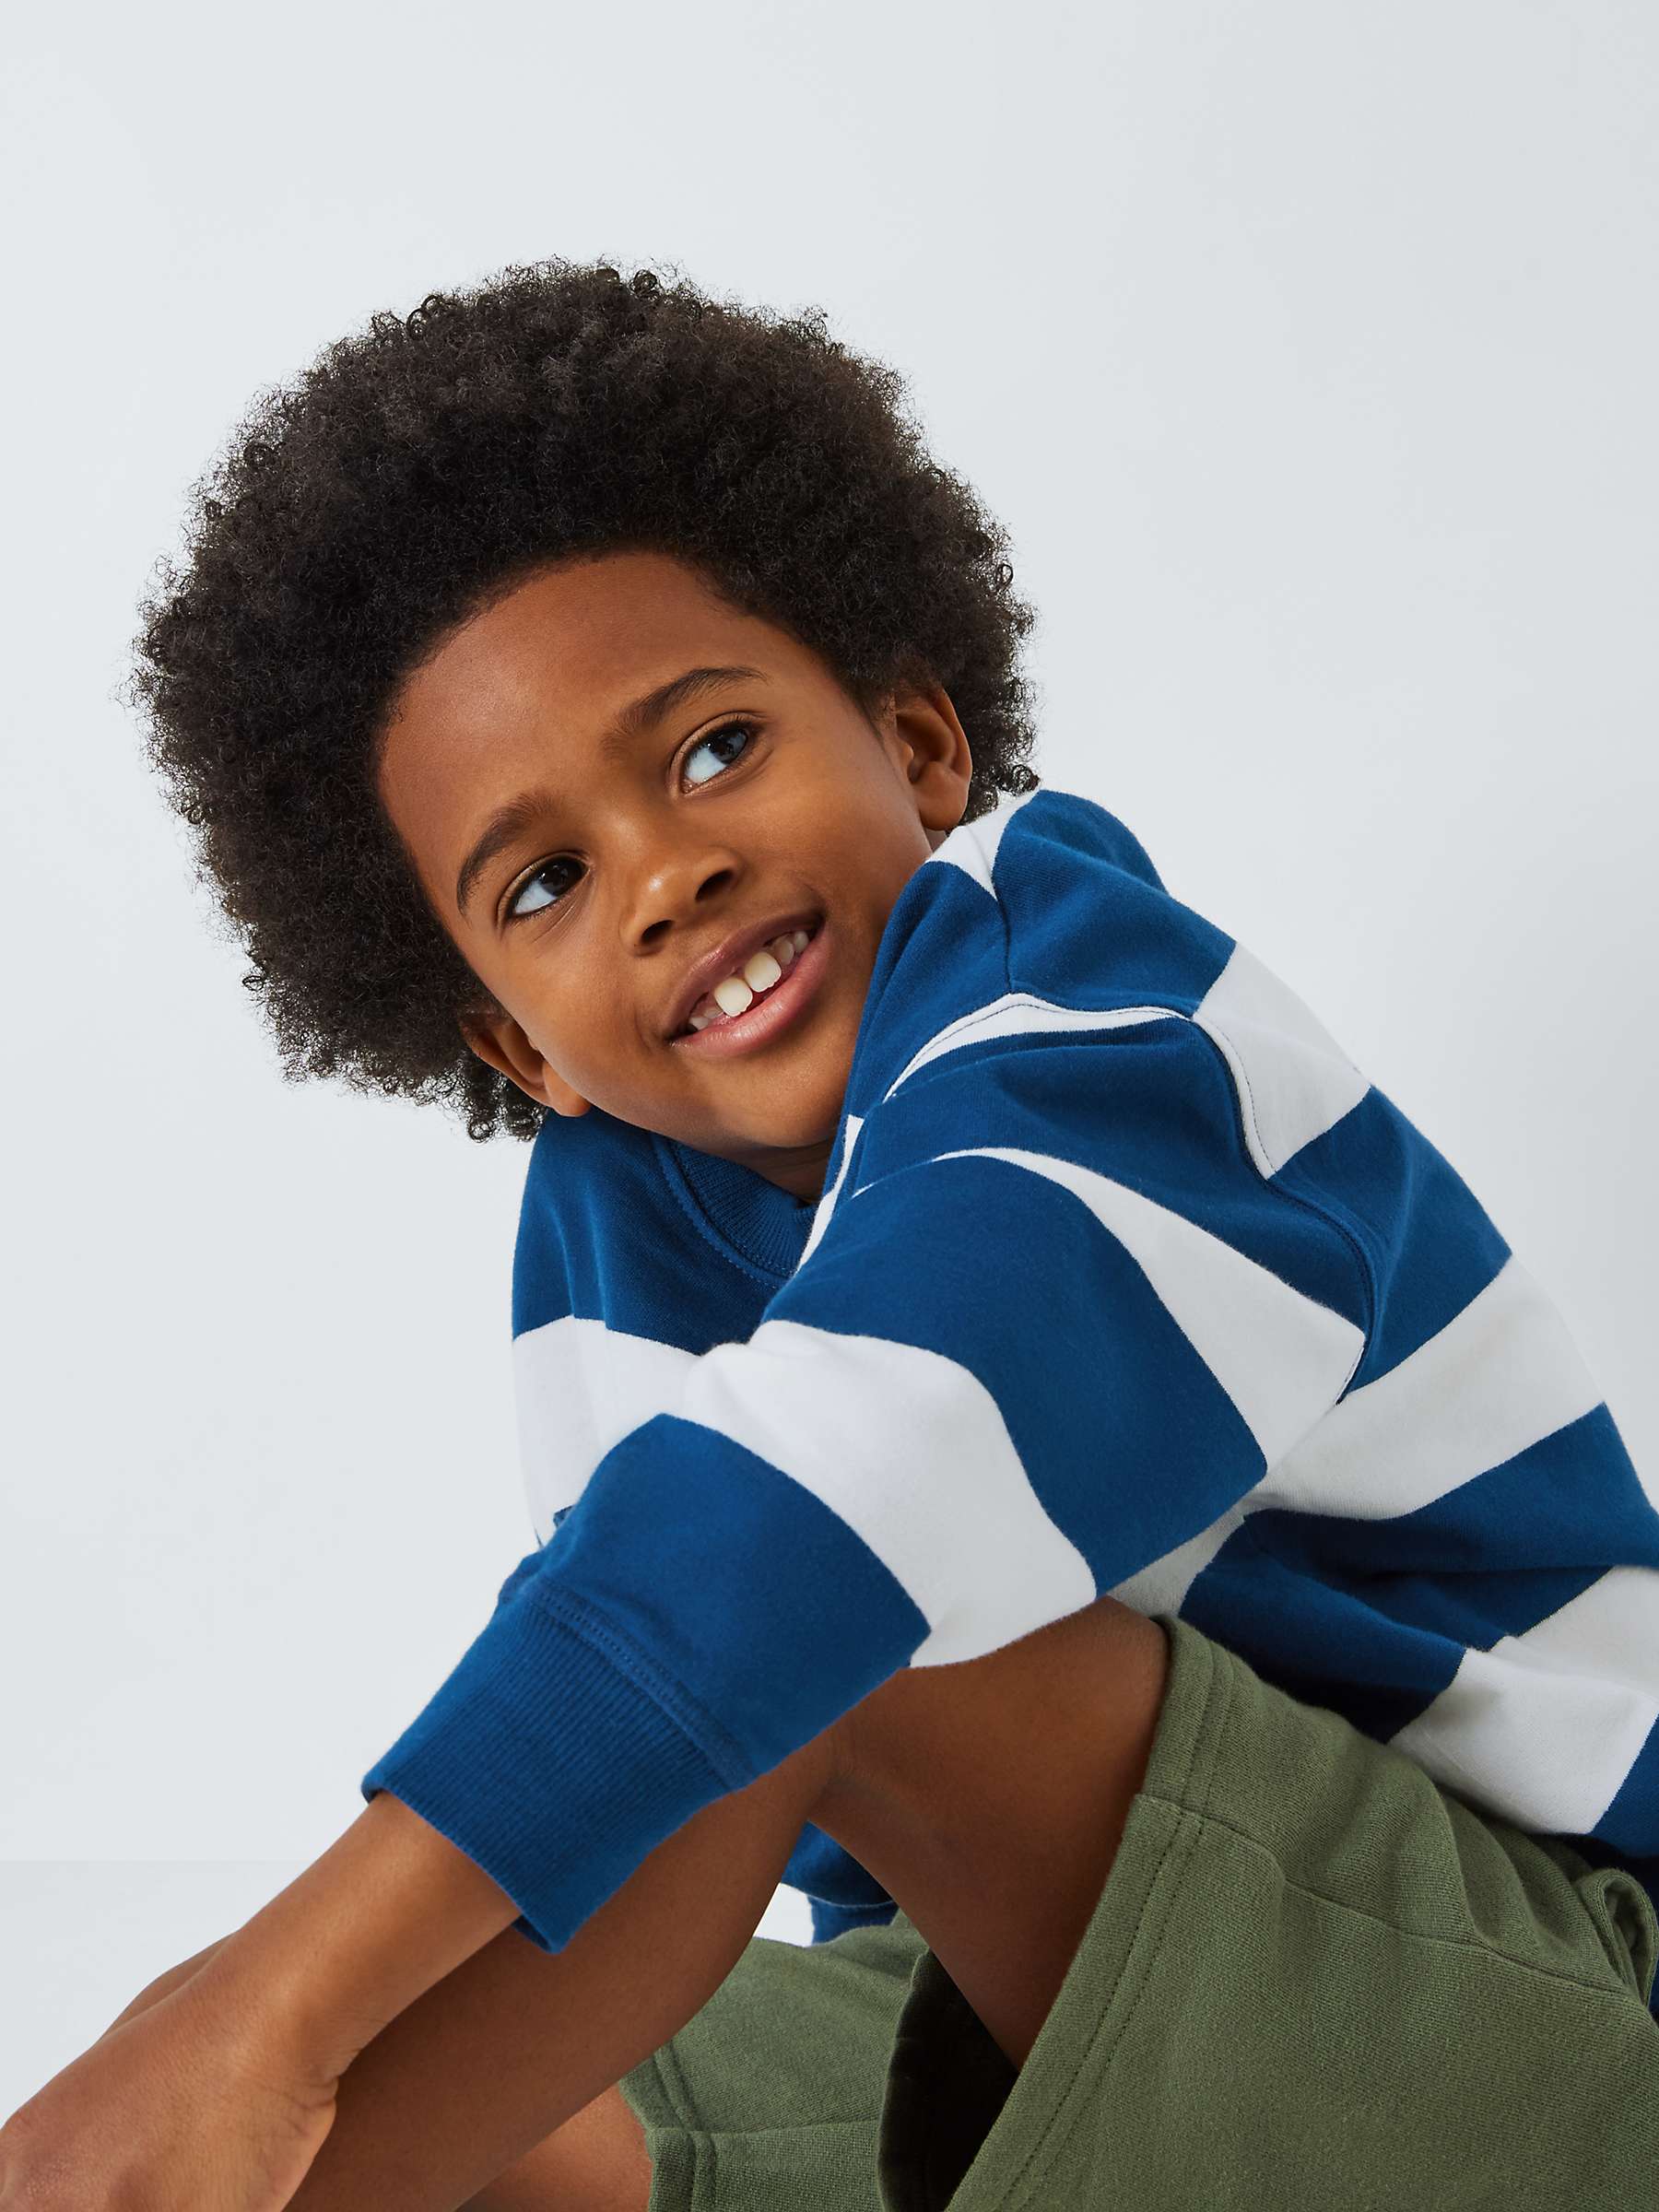 Buy John Lewis Kids' Block Stripe Sweatshirt, Multi Online at johnlewis.com